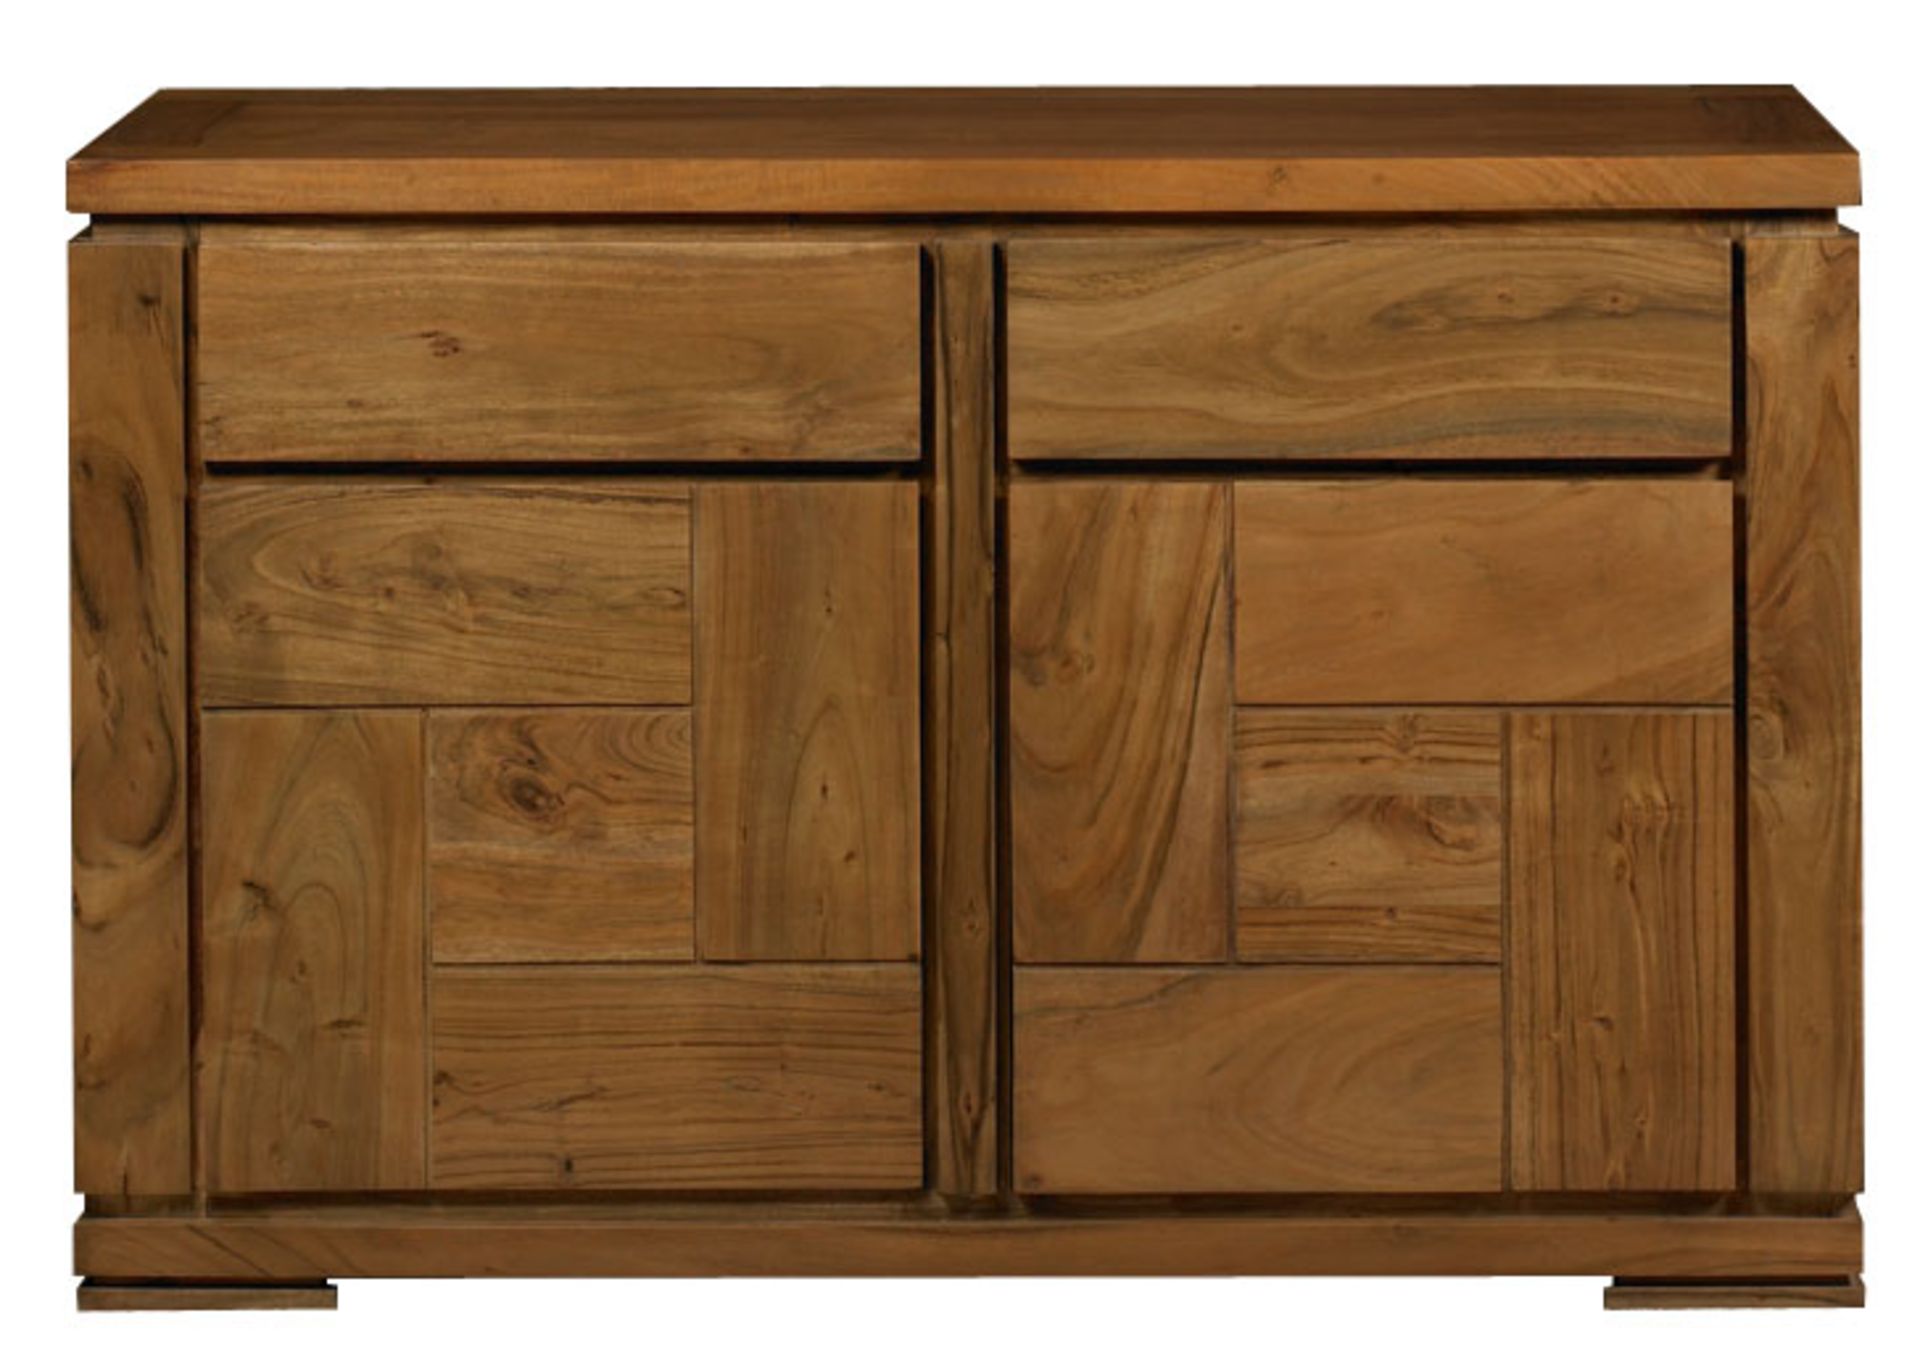 1 x Mark Webster Denmark Small Sideboard - Two Door / Two Door - Solid Rustic Acacia Wood with